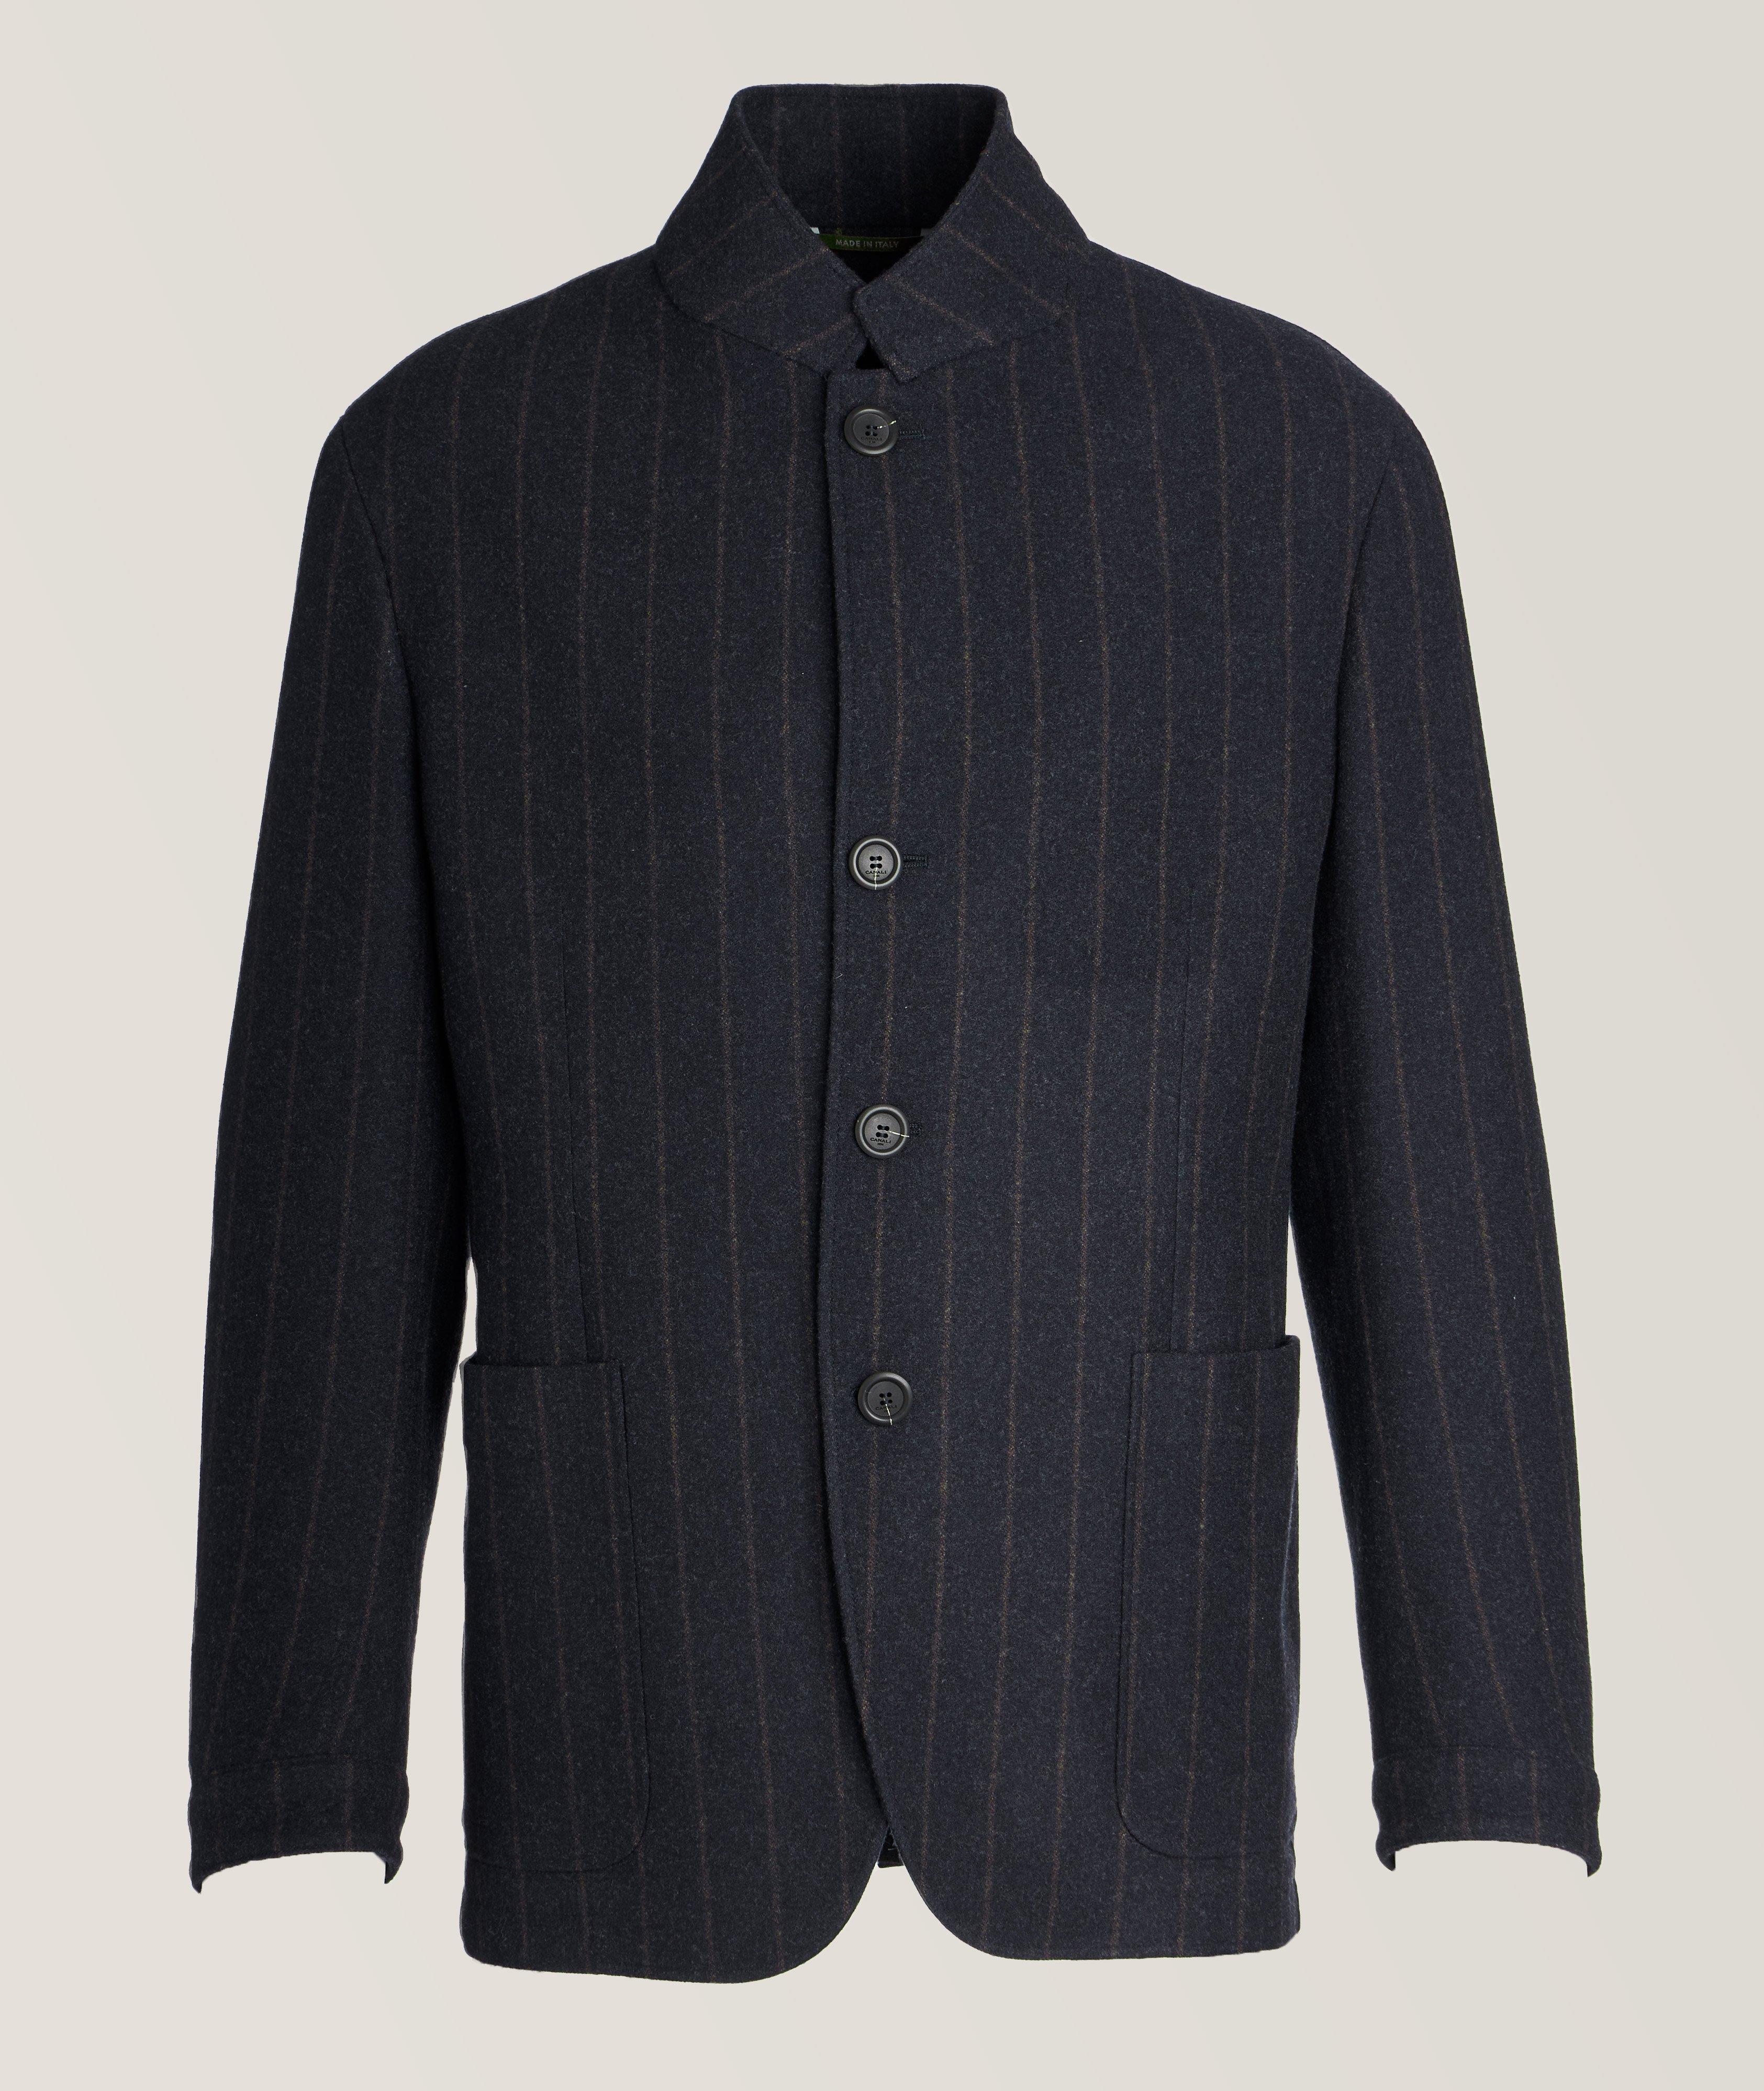 Nuvola Pinestripe Wool-Cashmere Coat image 0